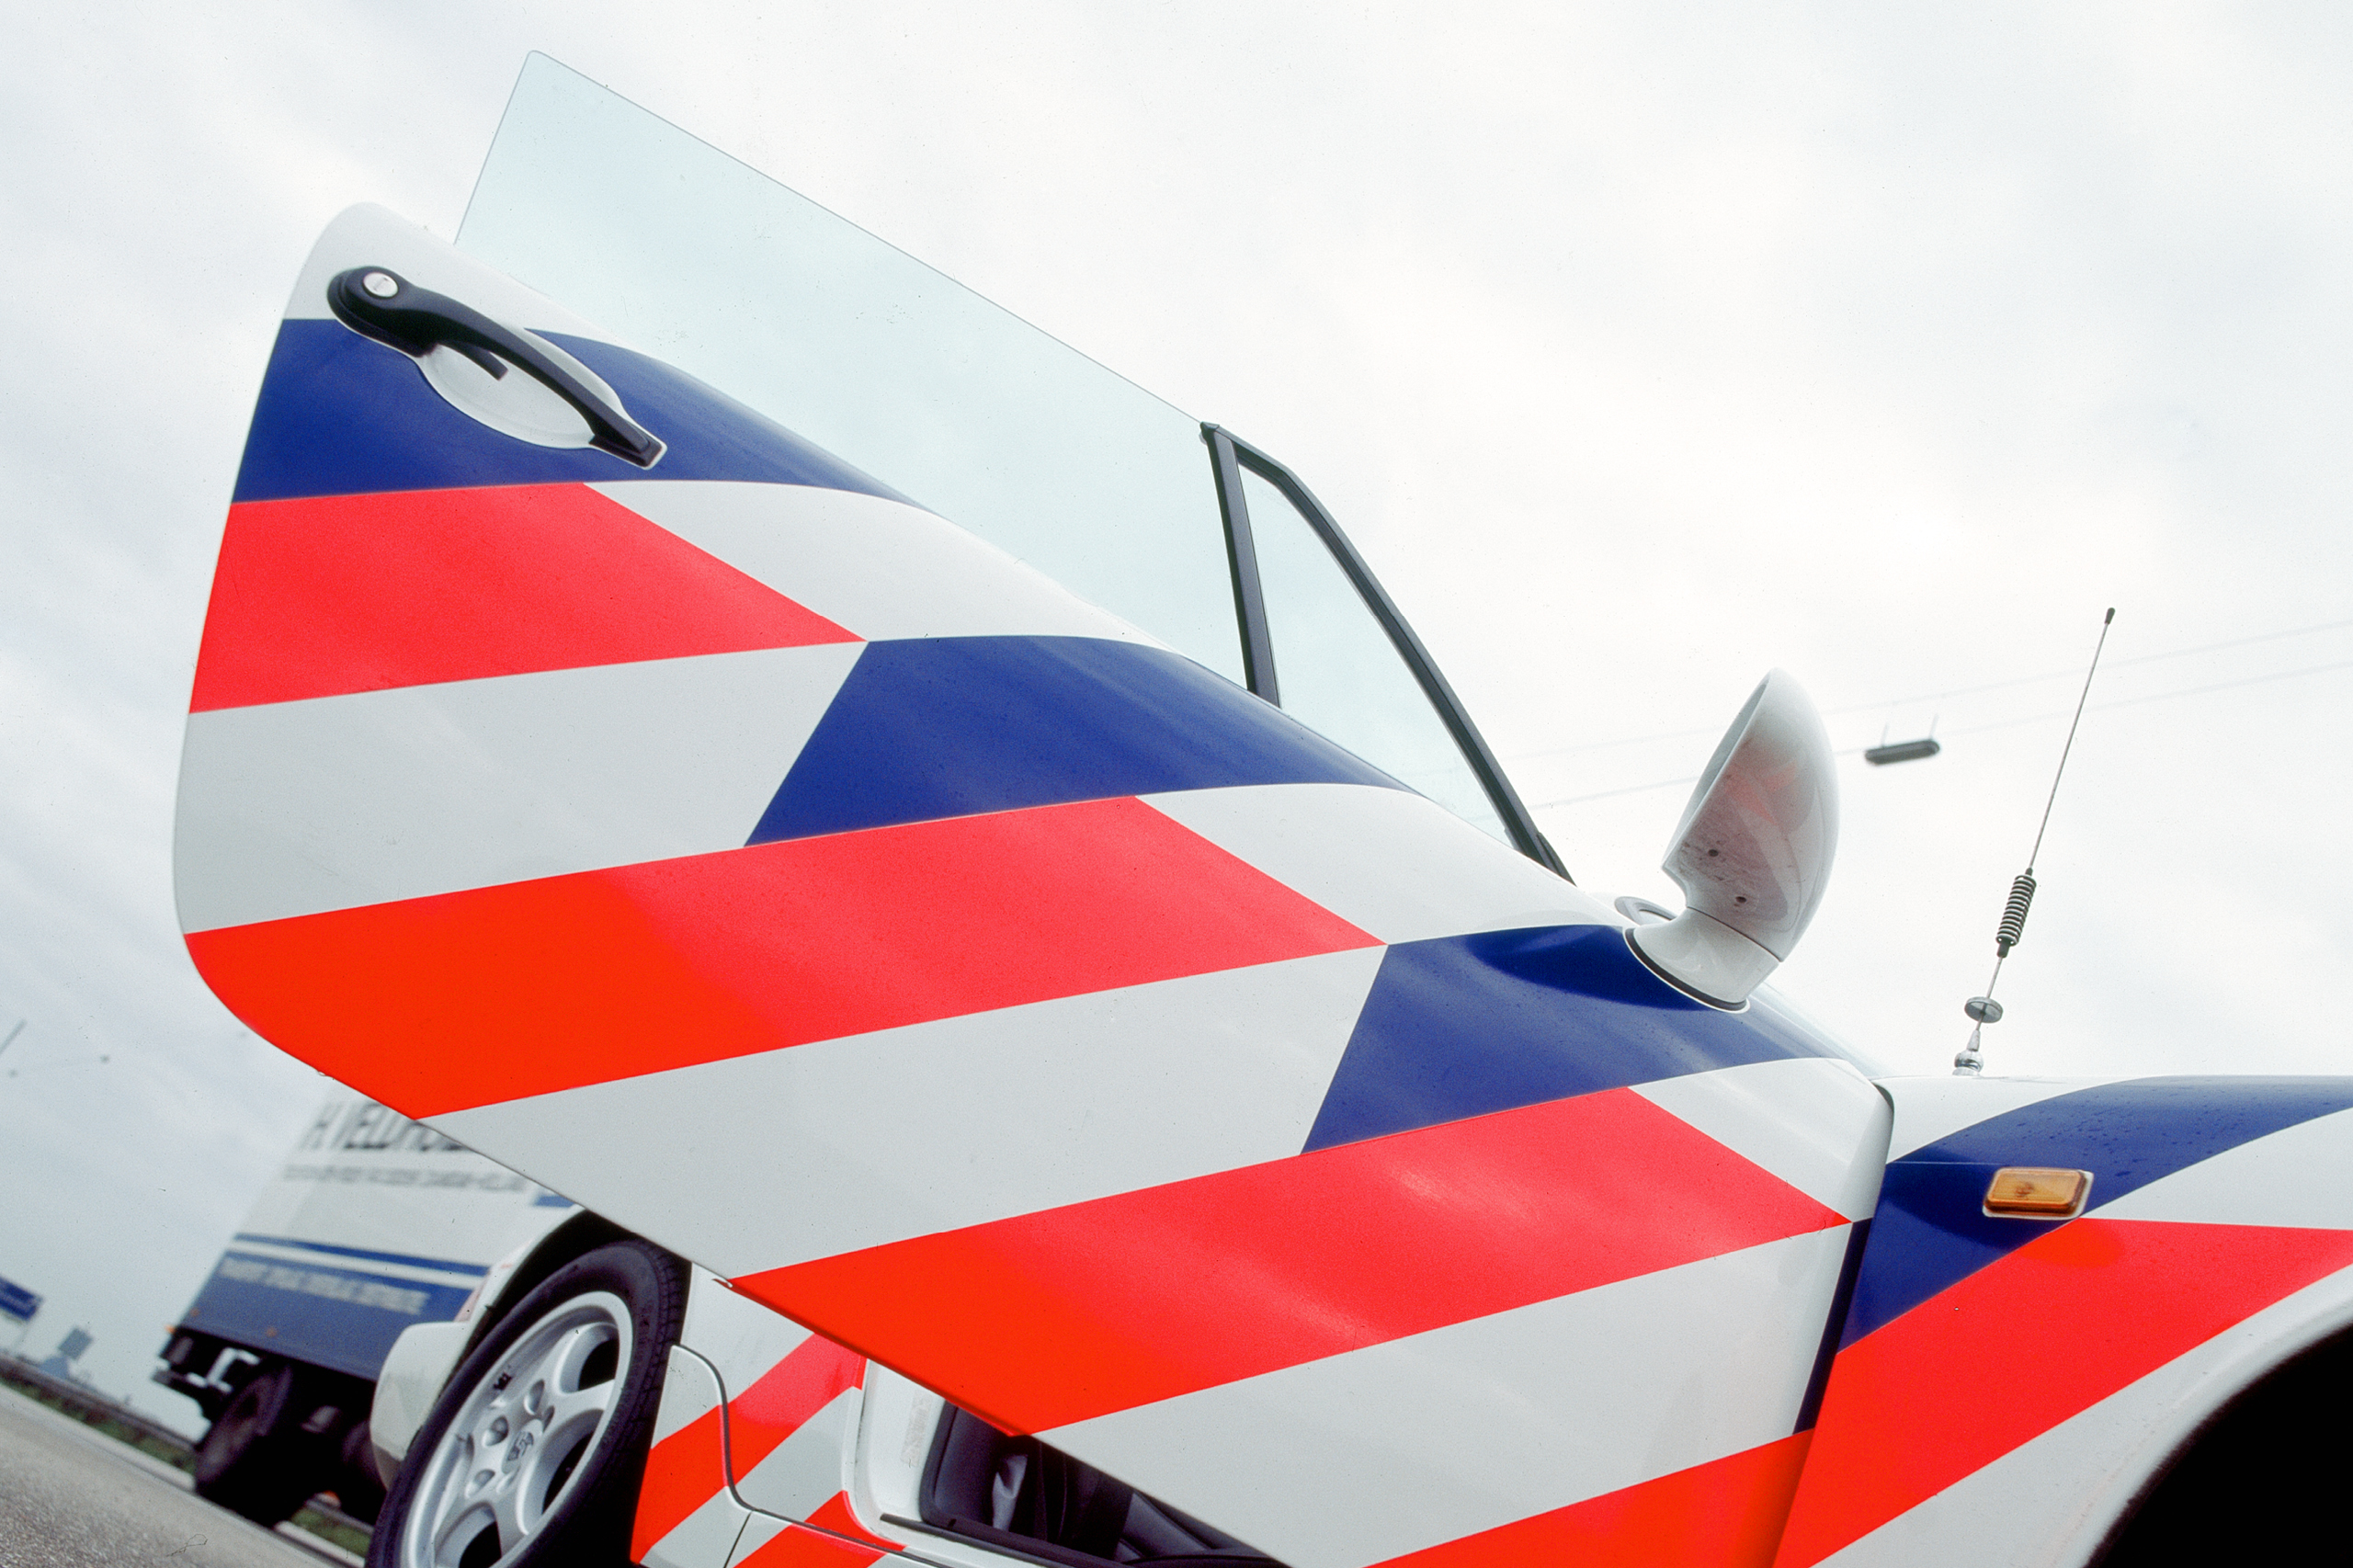 studio dumbar politie auto striping merk identiteit, police car brand identity - striping